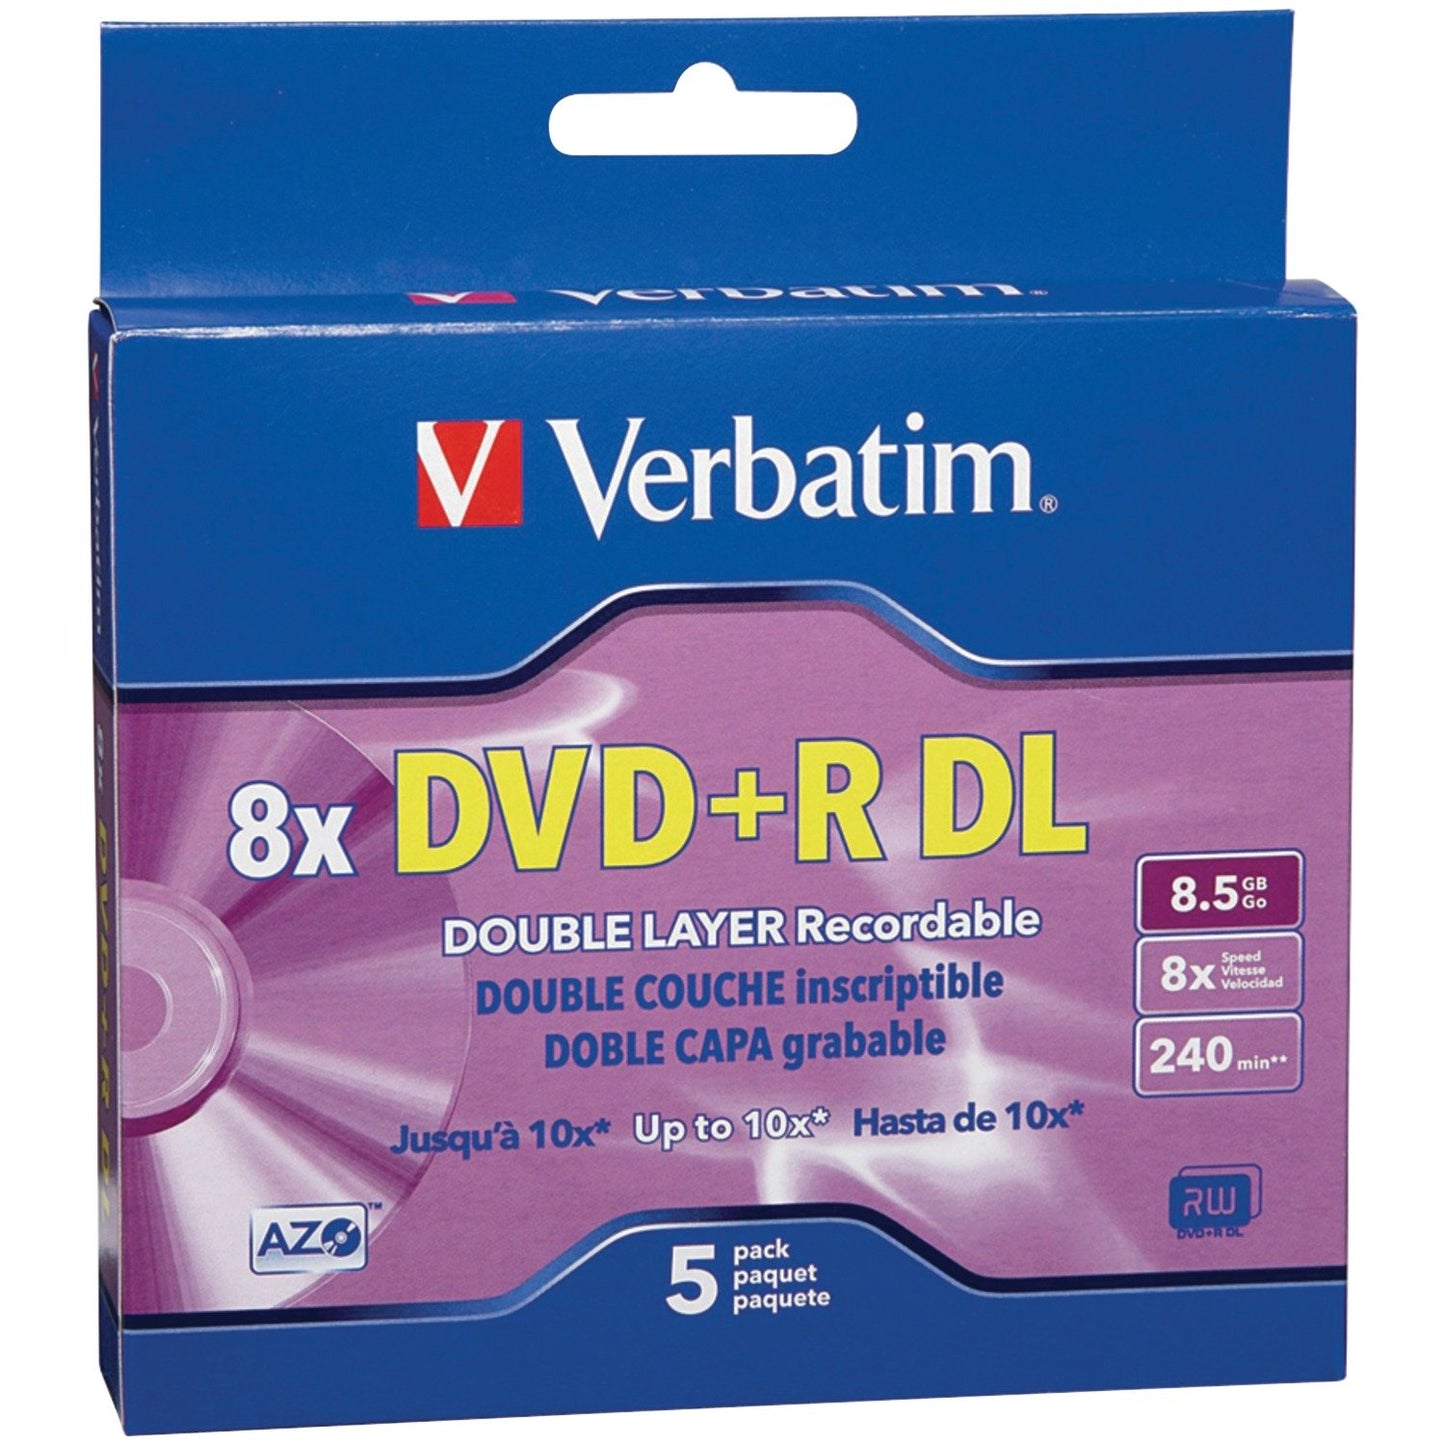 Verbatim 95311 8.5GB 8x Branded AZO DVD+R DLs, 5 pk with Slim Cases